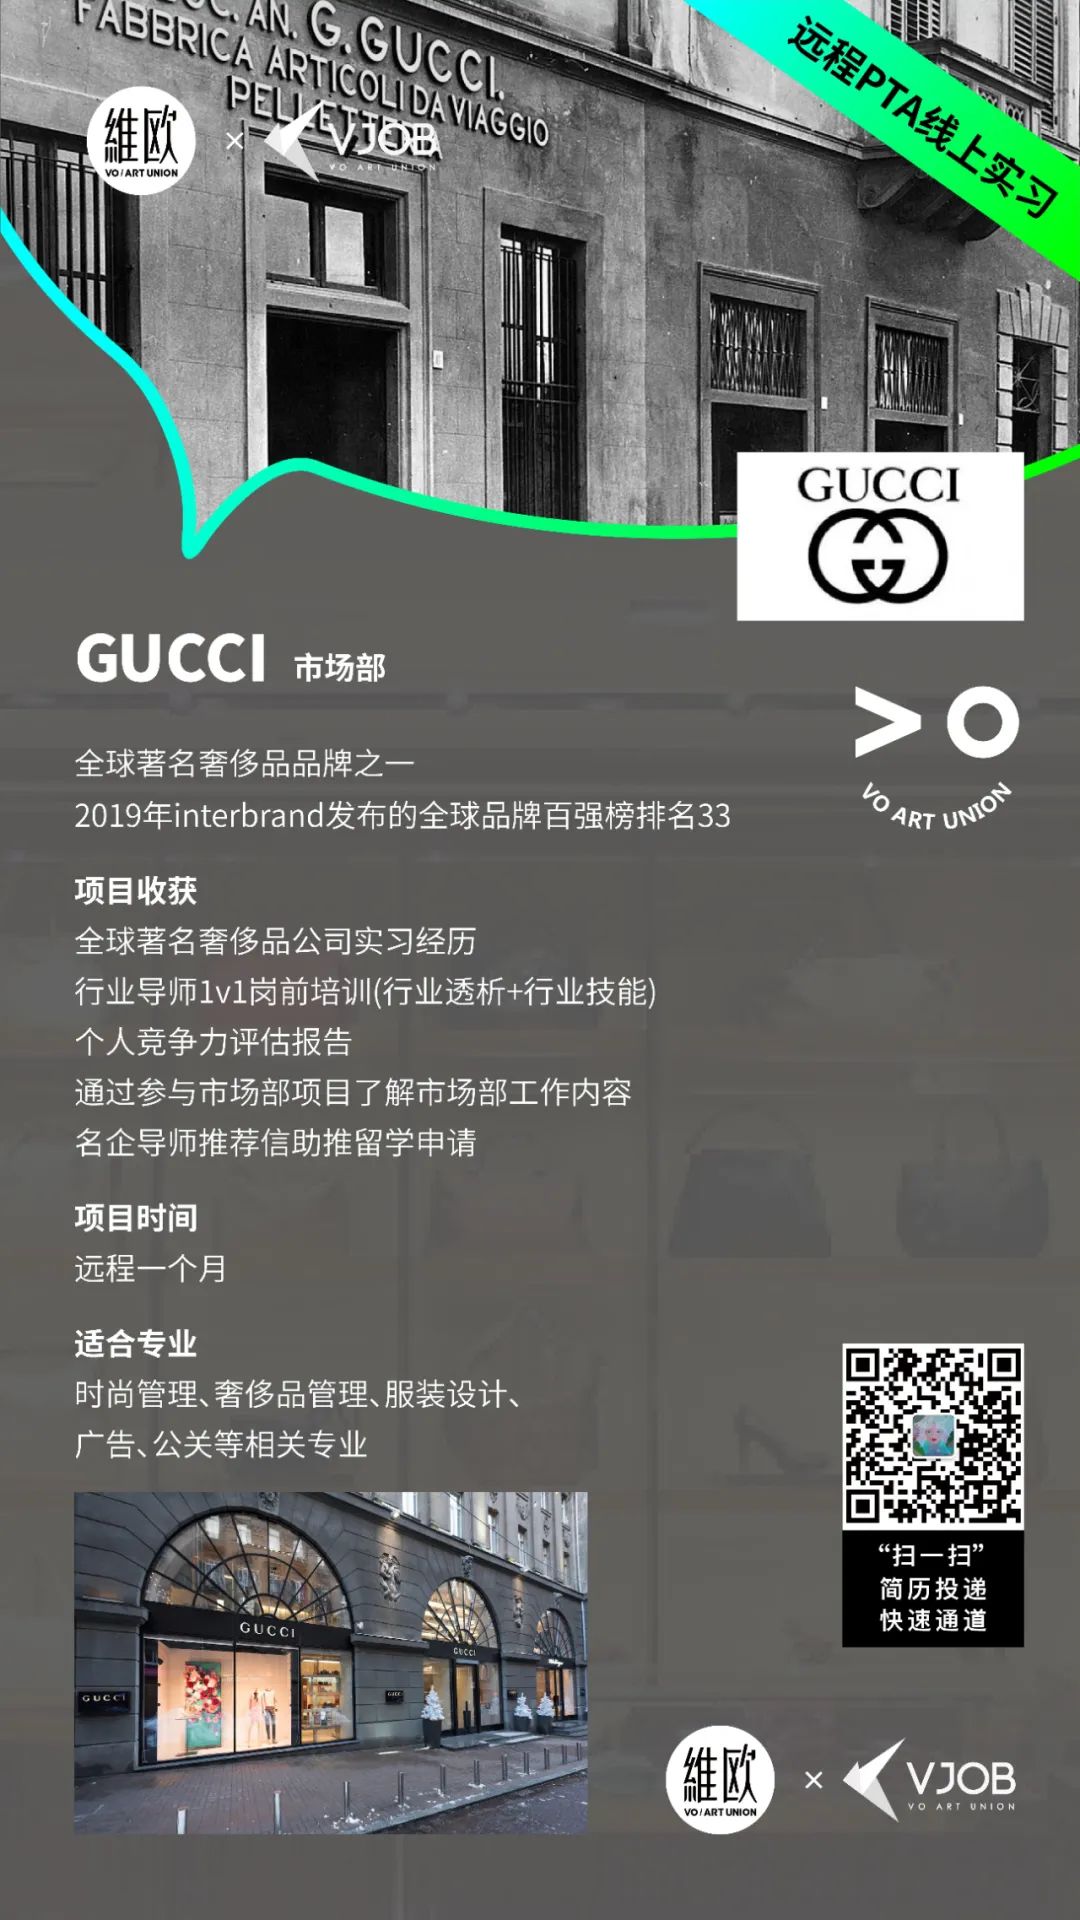 Vjob背景提升 Gucci 市场部远程pta实习 维欧艺术留学